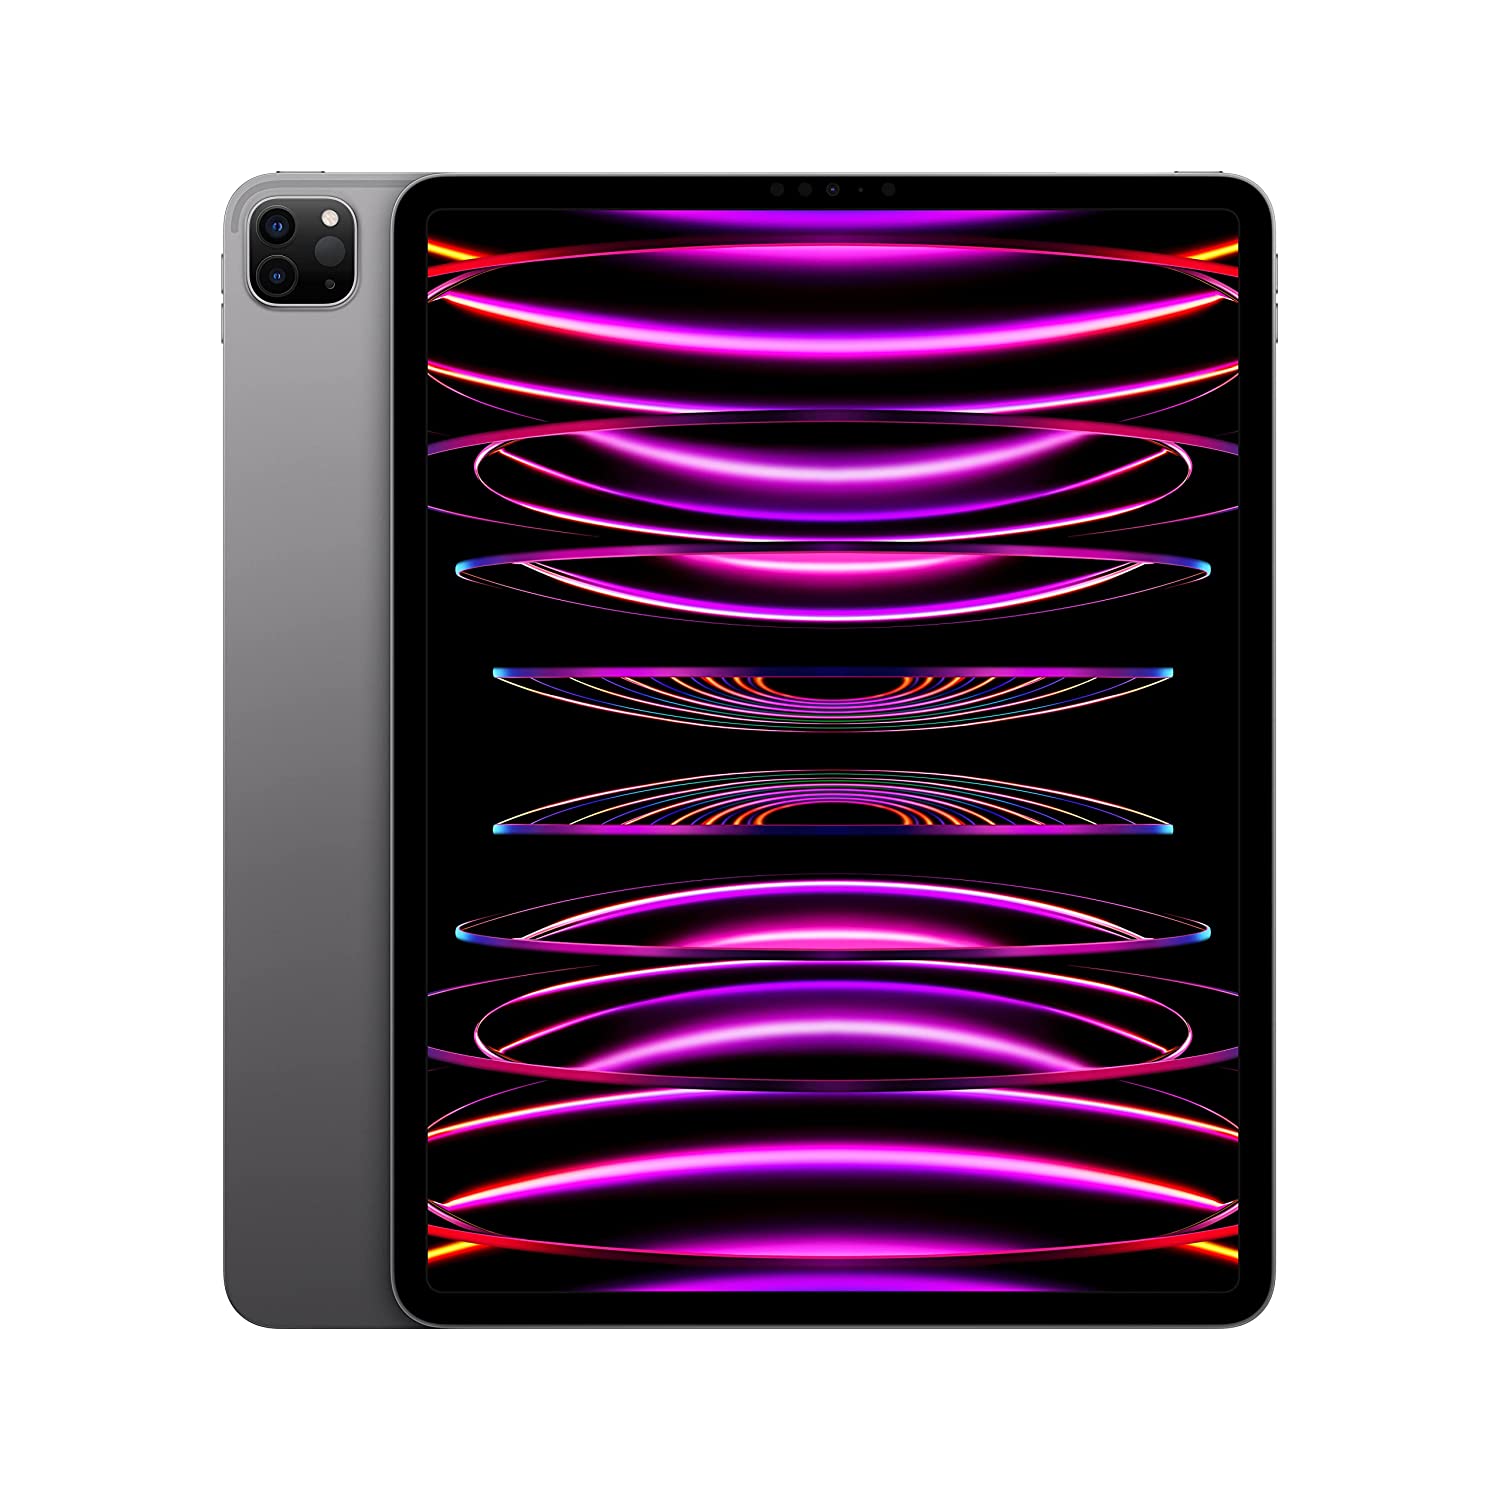 iPad Pro 12.9" Gen 5